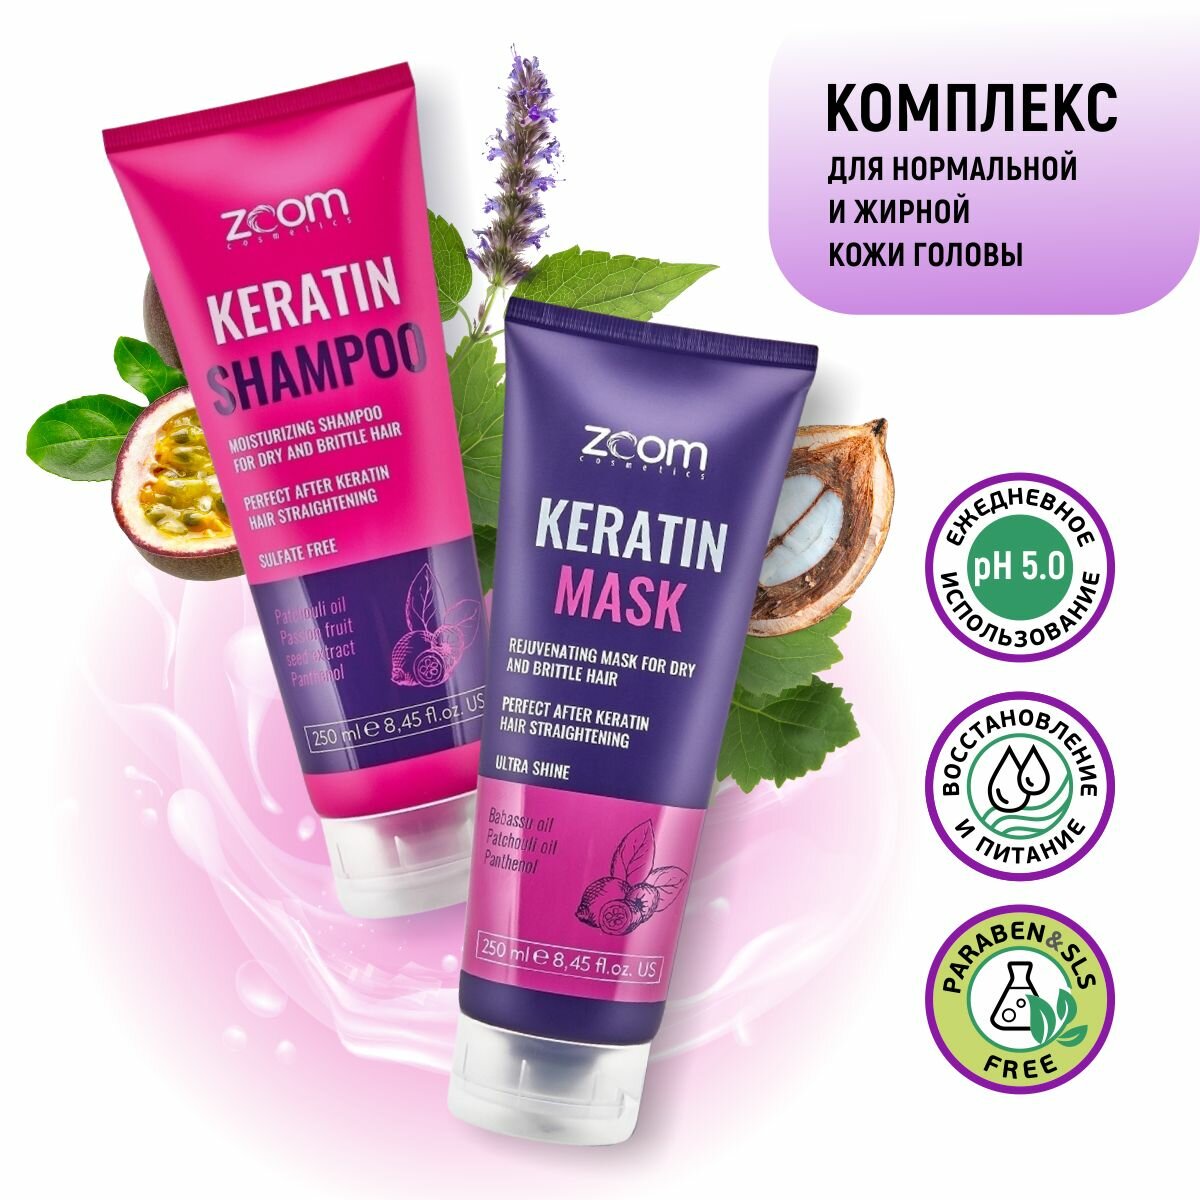 Комплект для домашнего ухода: ZOOM Keratin Shampoo 250 ml + ZOOM Keratin Mask 250 ml